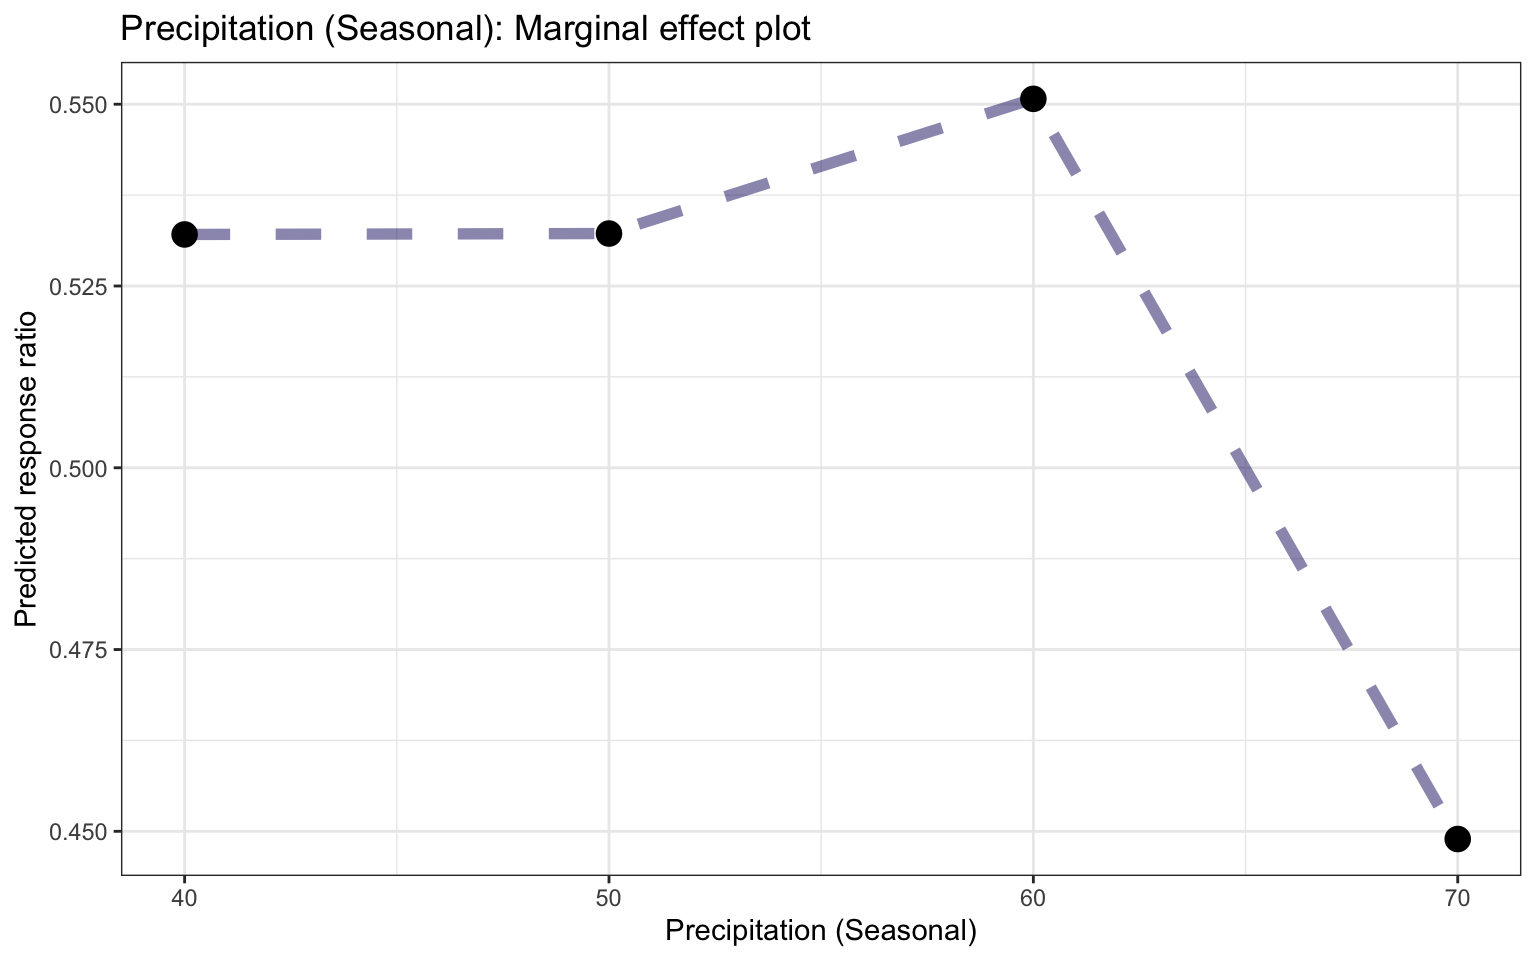 Marginal effects plot for precipitation seasonality based on the RF model